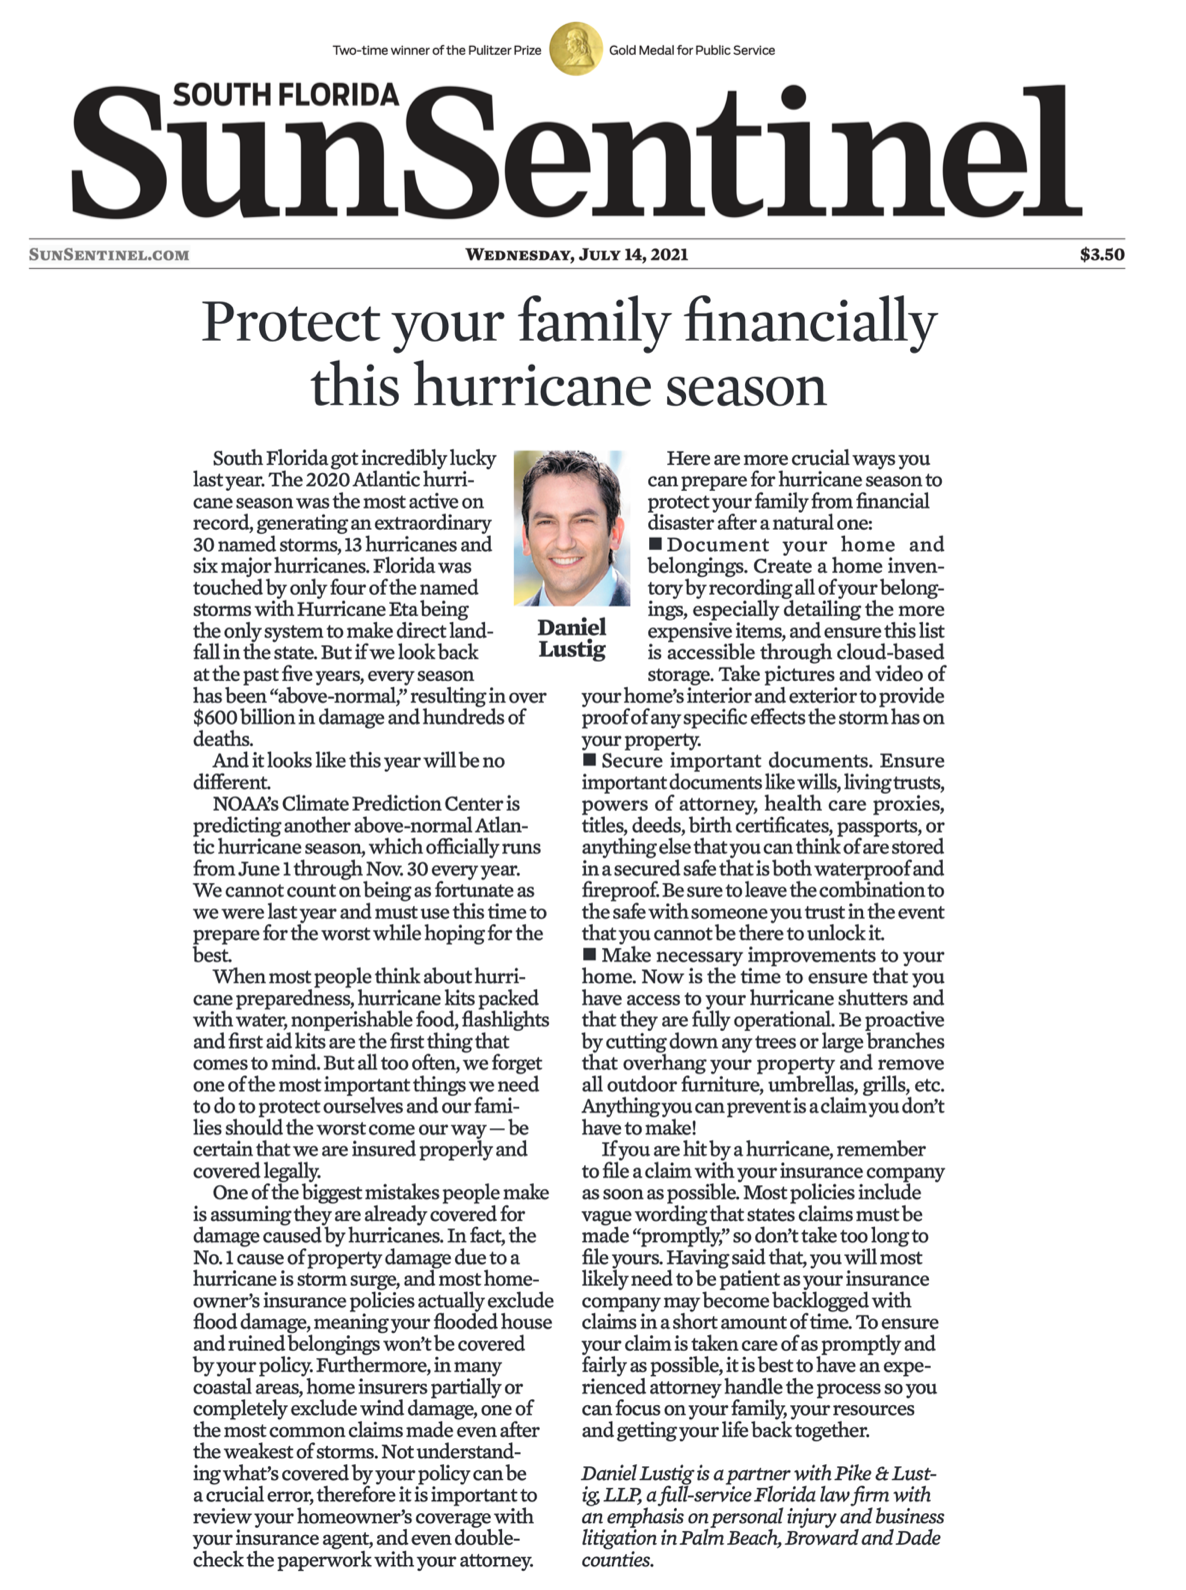 Protect your family financially this hurricane season